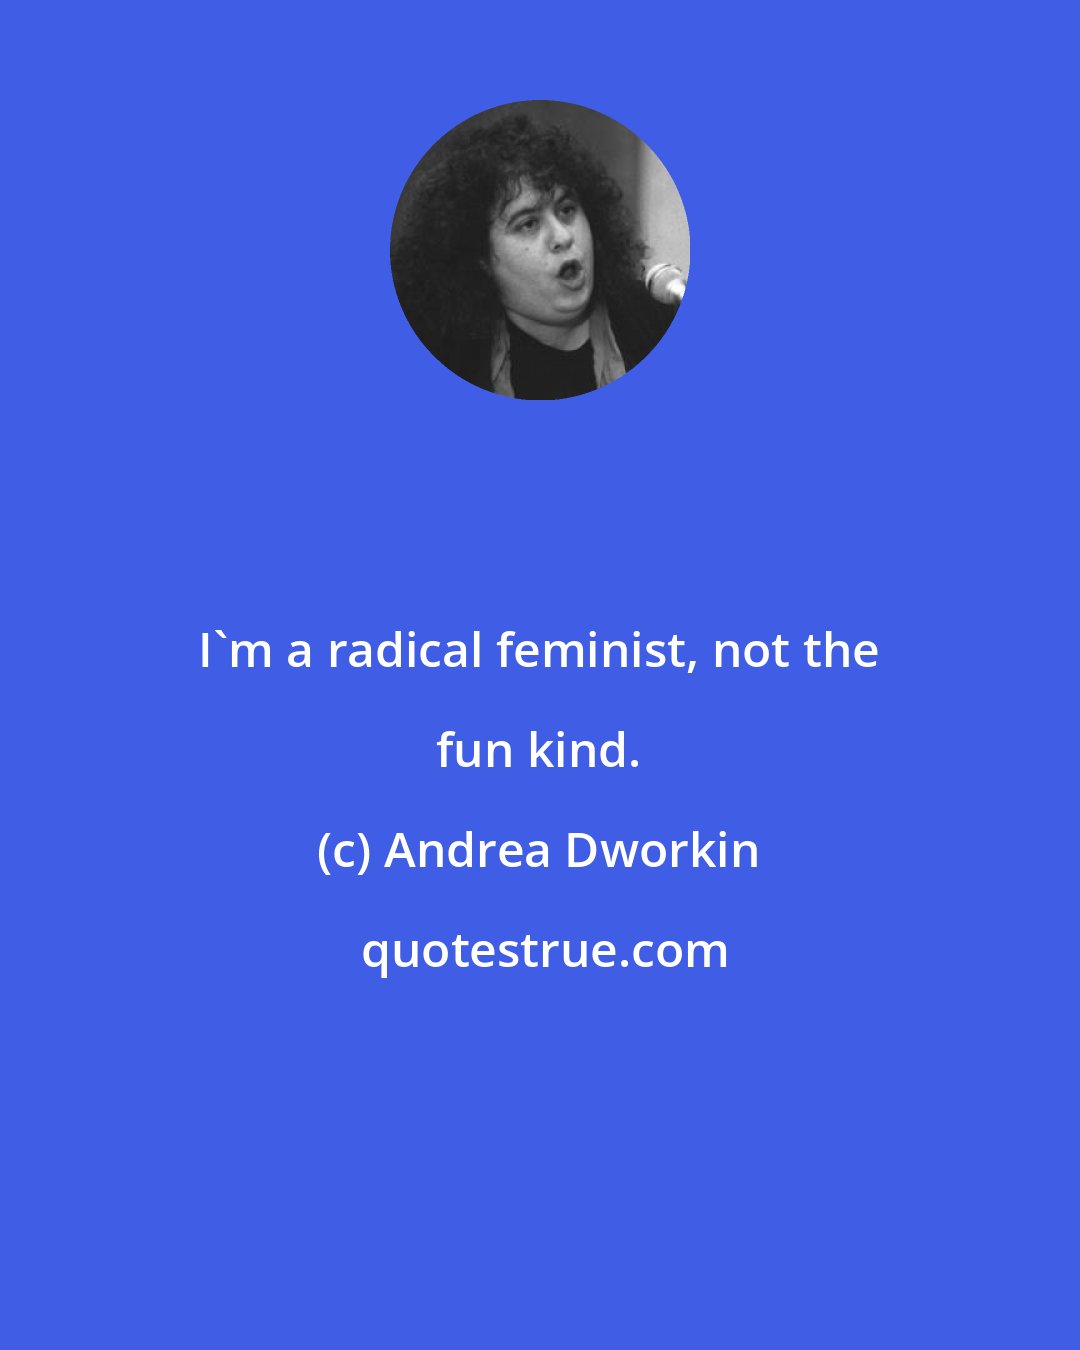 Andrea Dworkin: I'm a radical feminist, not the fun kind.